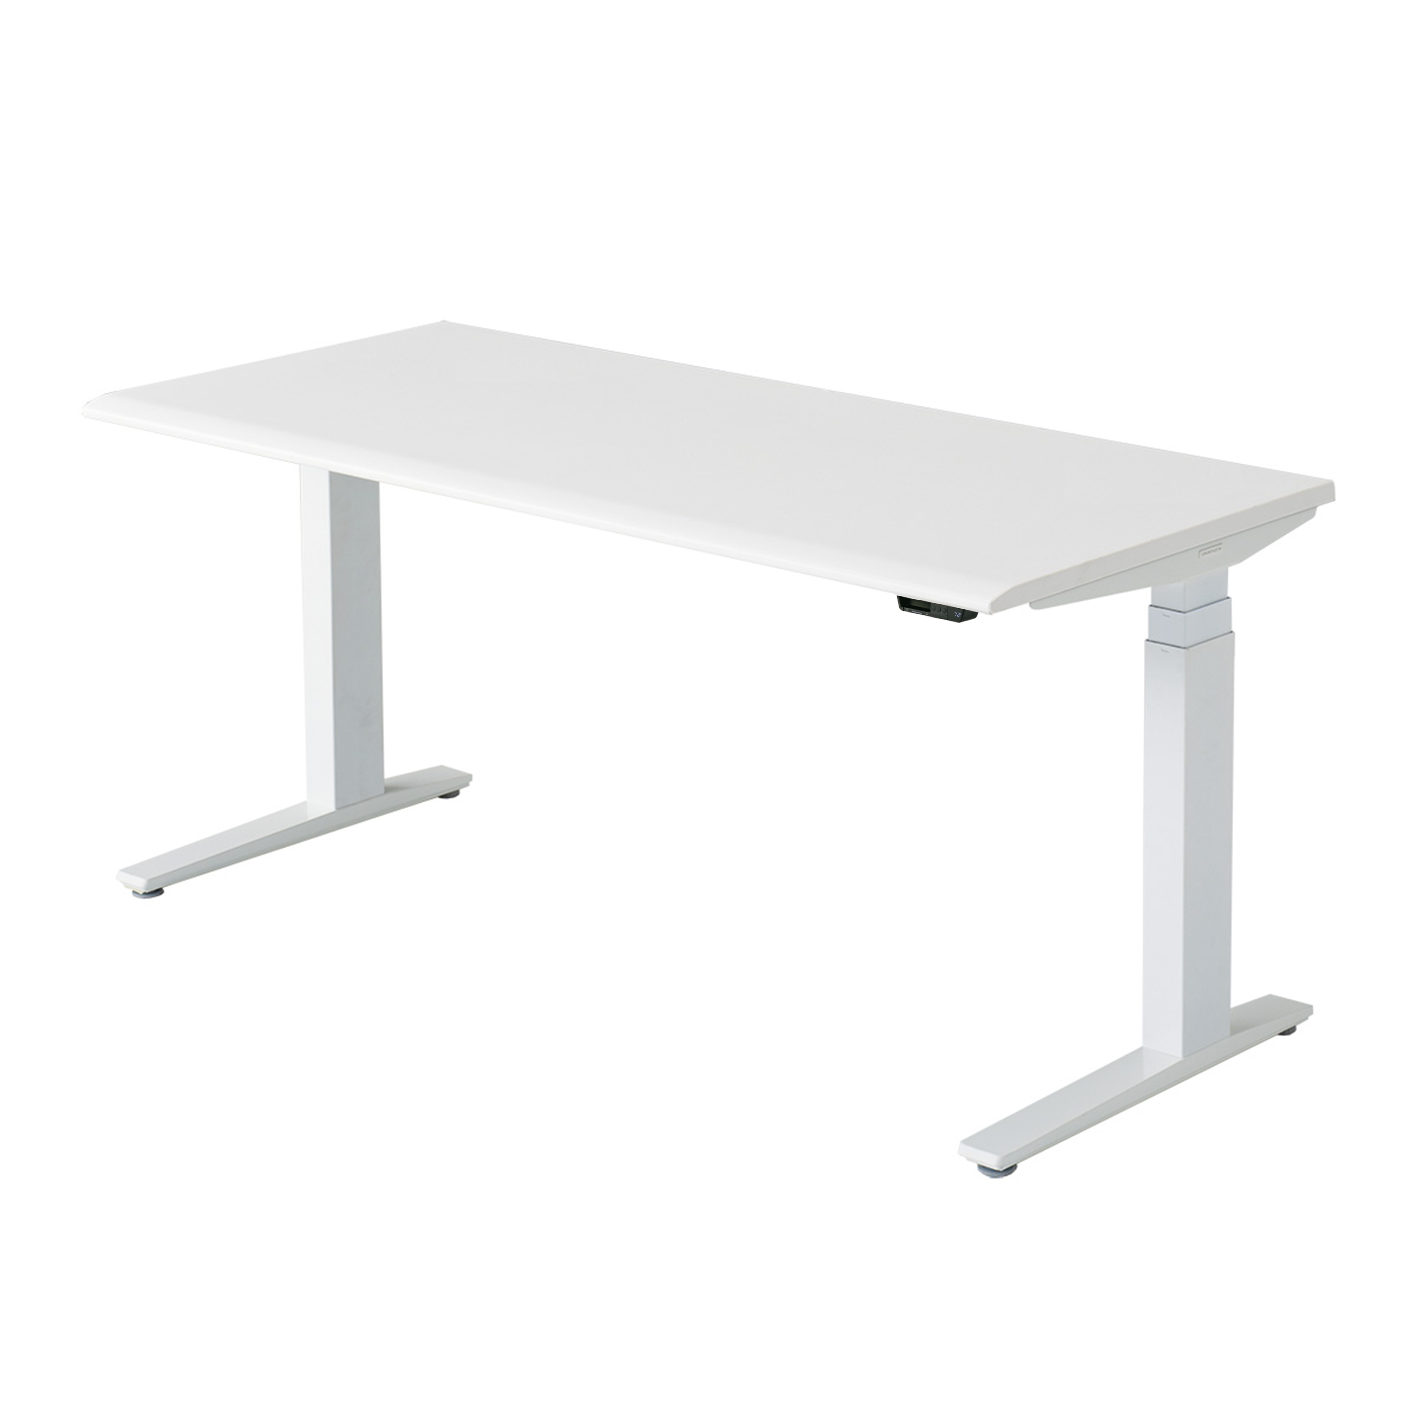 Okamura SW height adjustable table in white